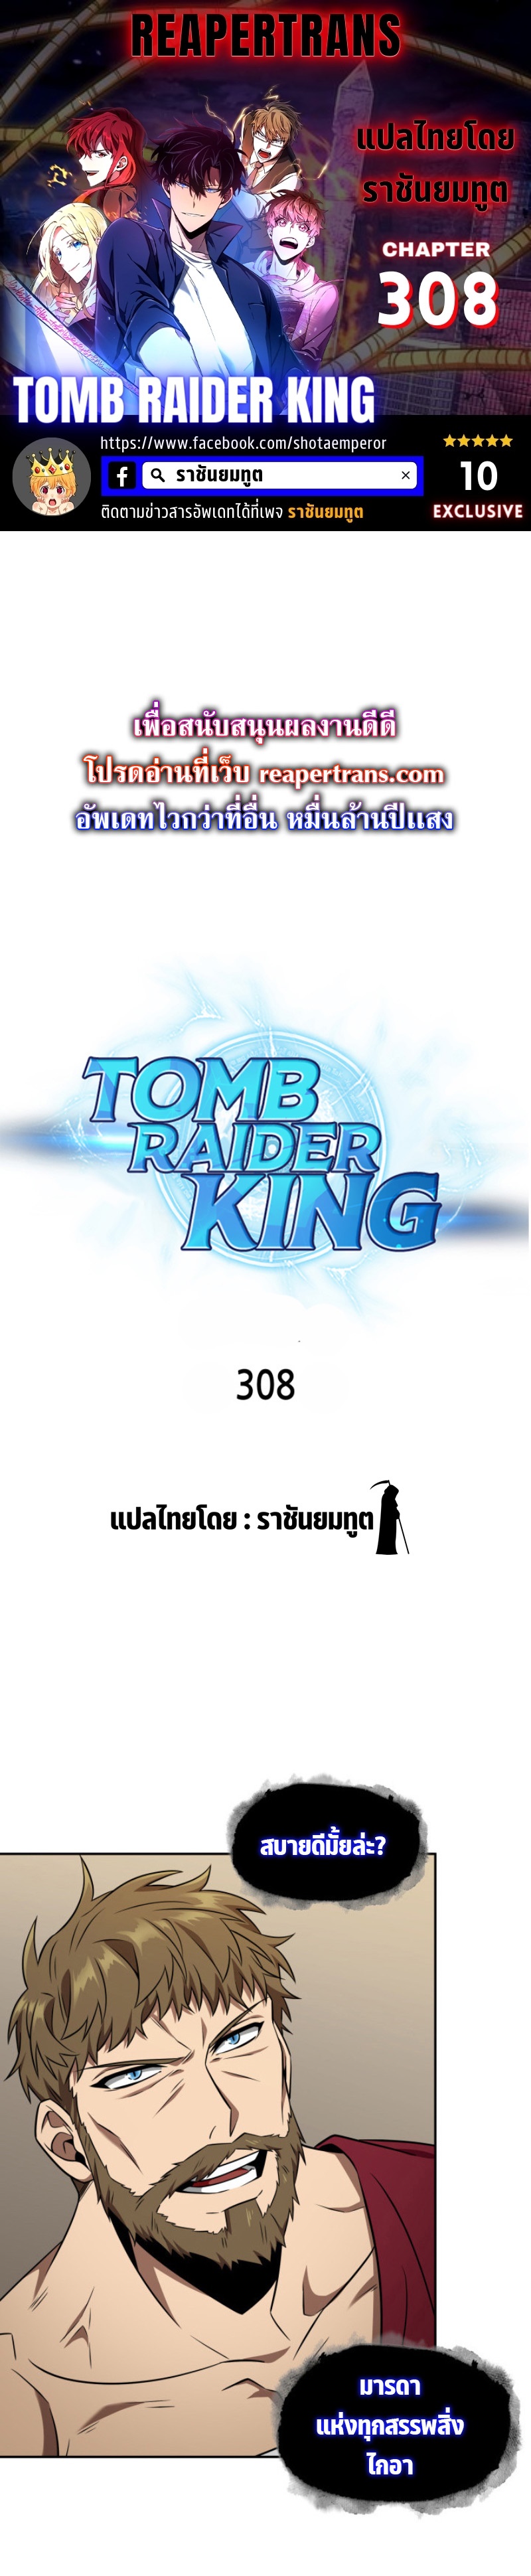 tomb raider king 308.01